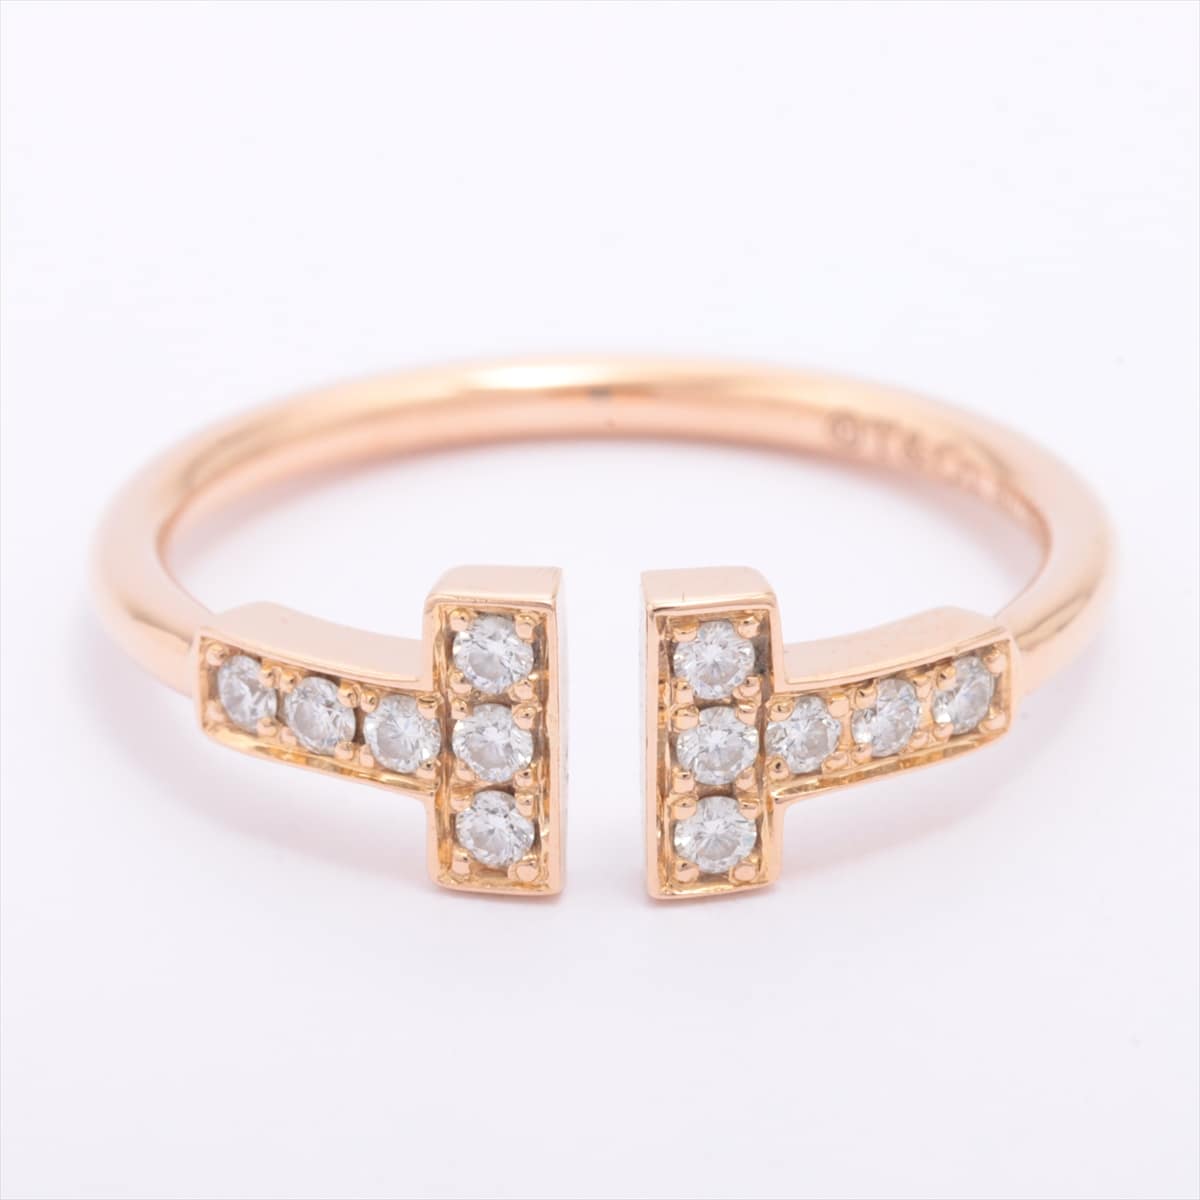 Tiffany T Wire diamond rings 750(PG) 2.3g